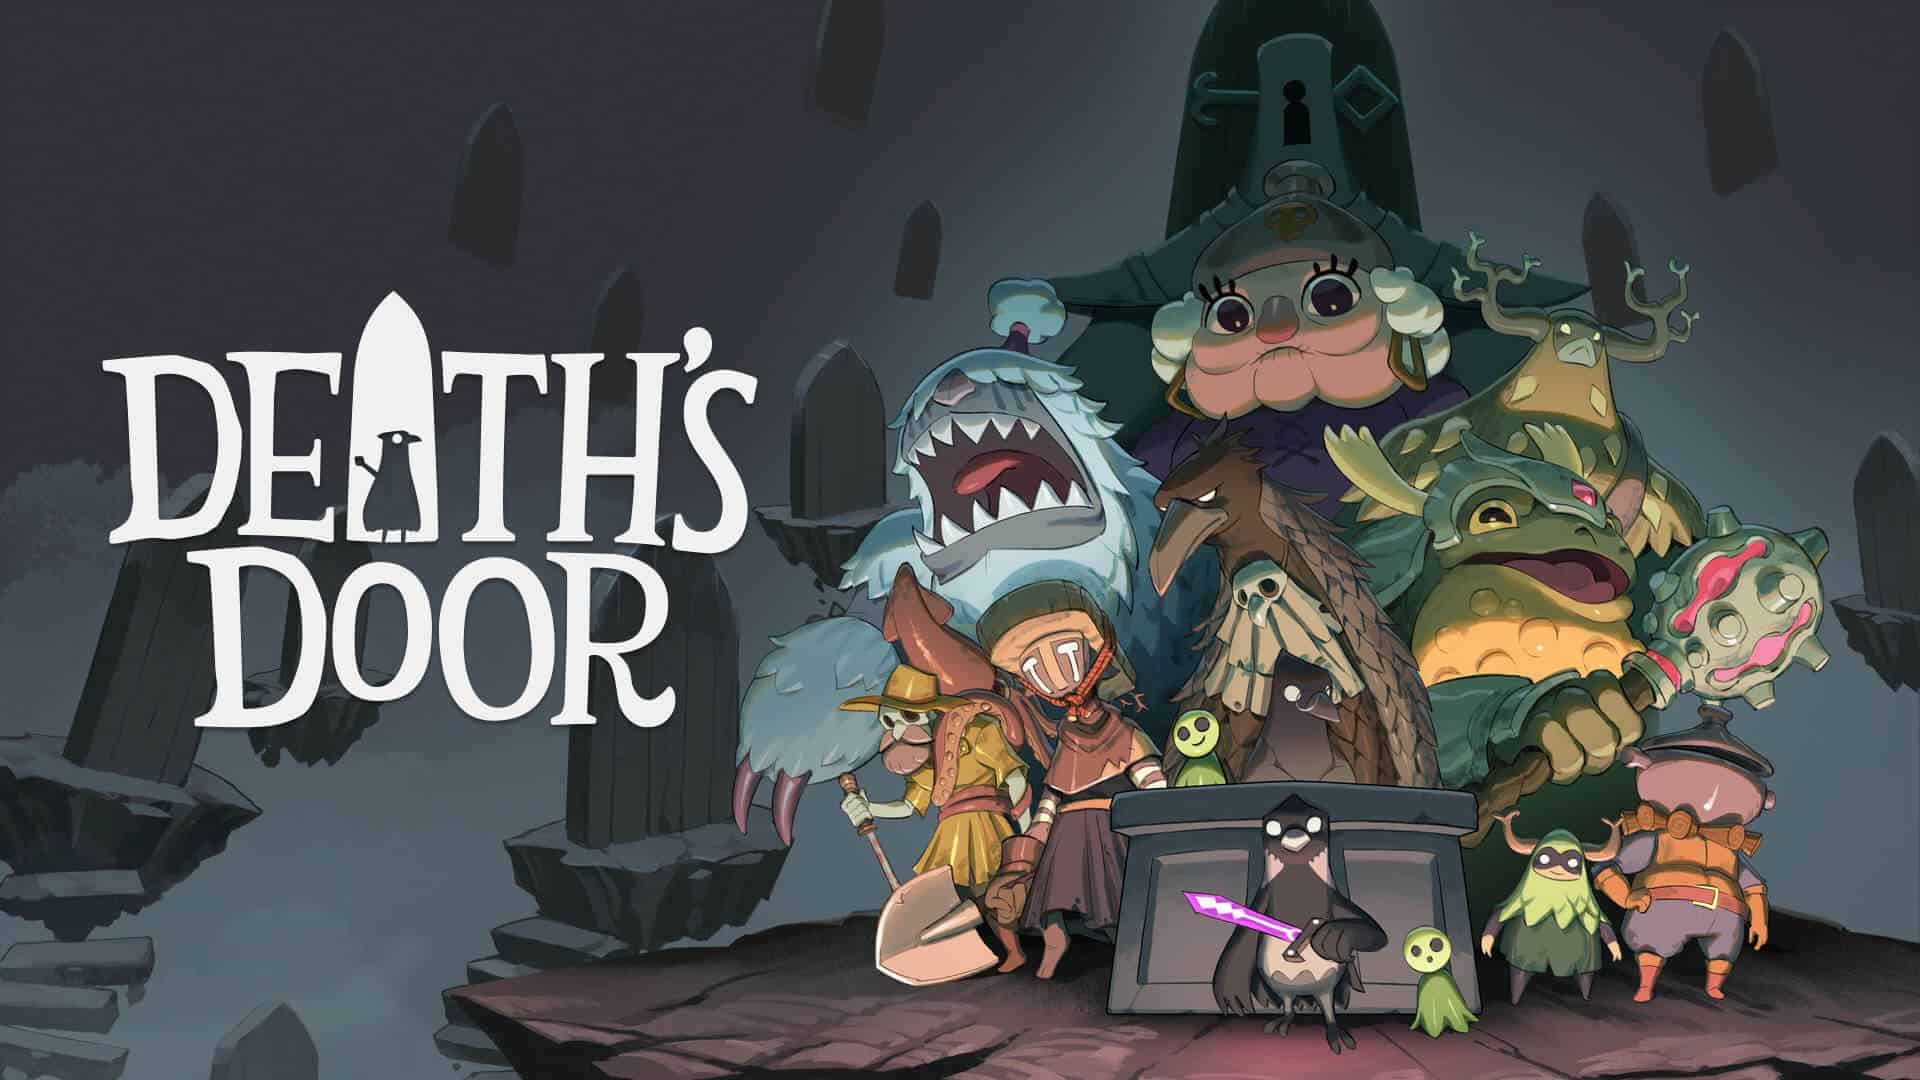 Death’s Door will reach Nintendo Switch on November 23